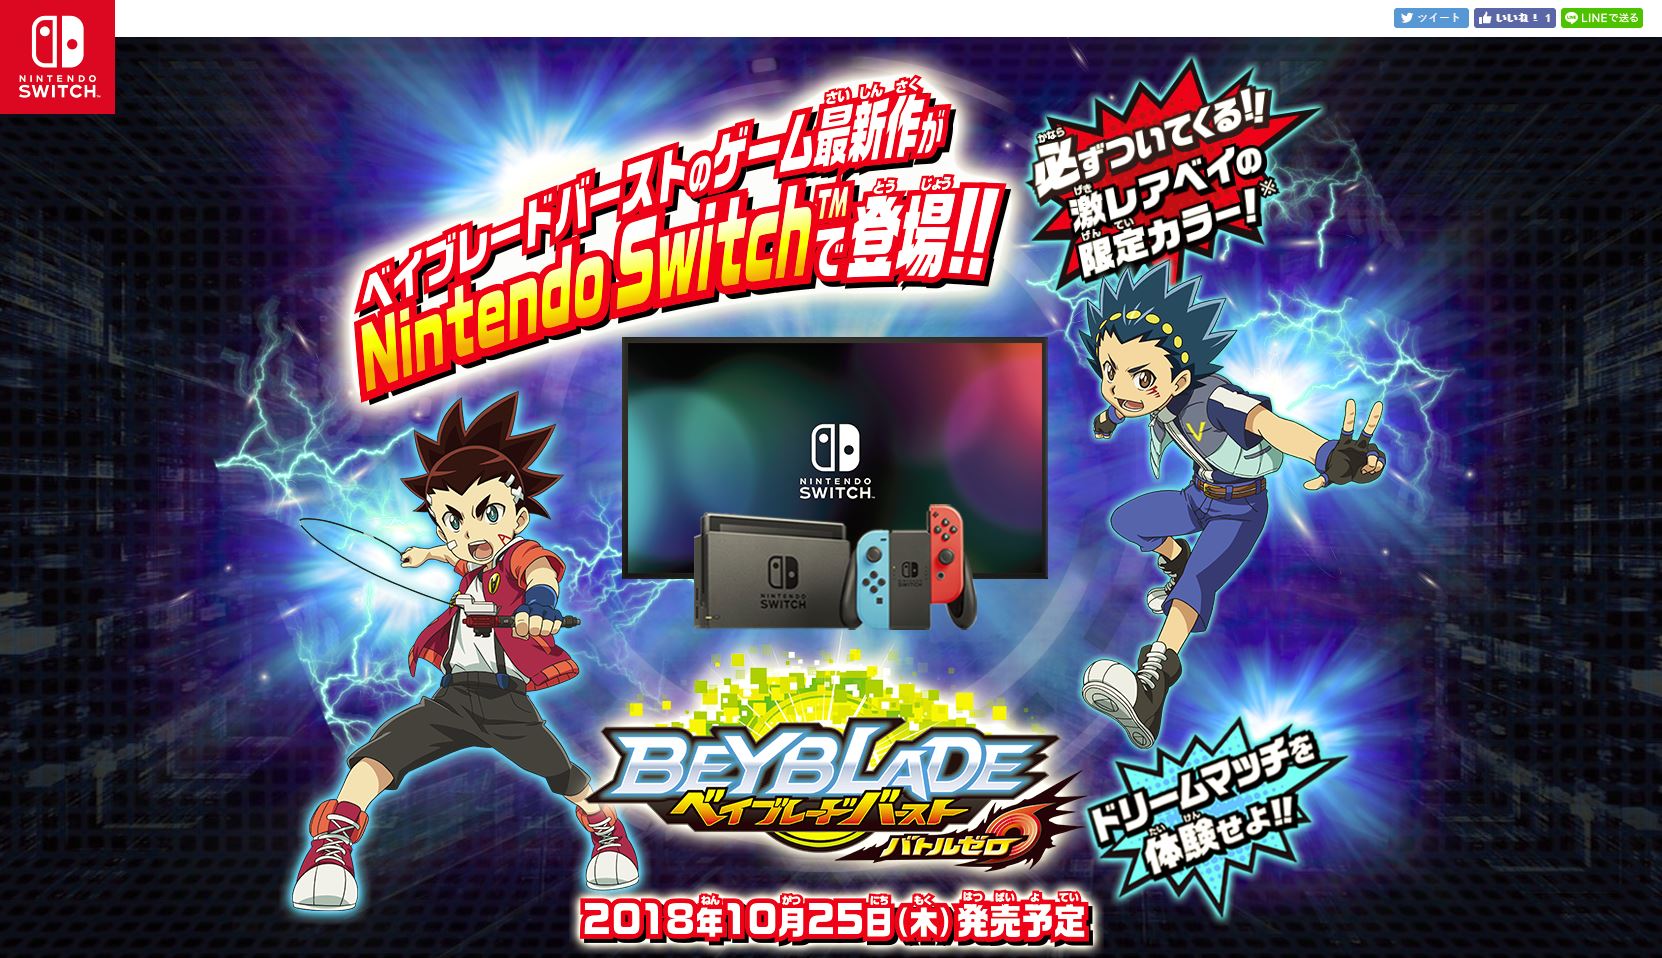 Anunciado Beyblade Burst: Zero para Nintendo Switch - Ramen Para Dos